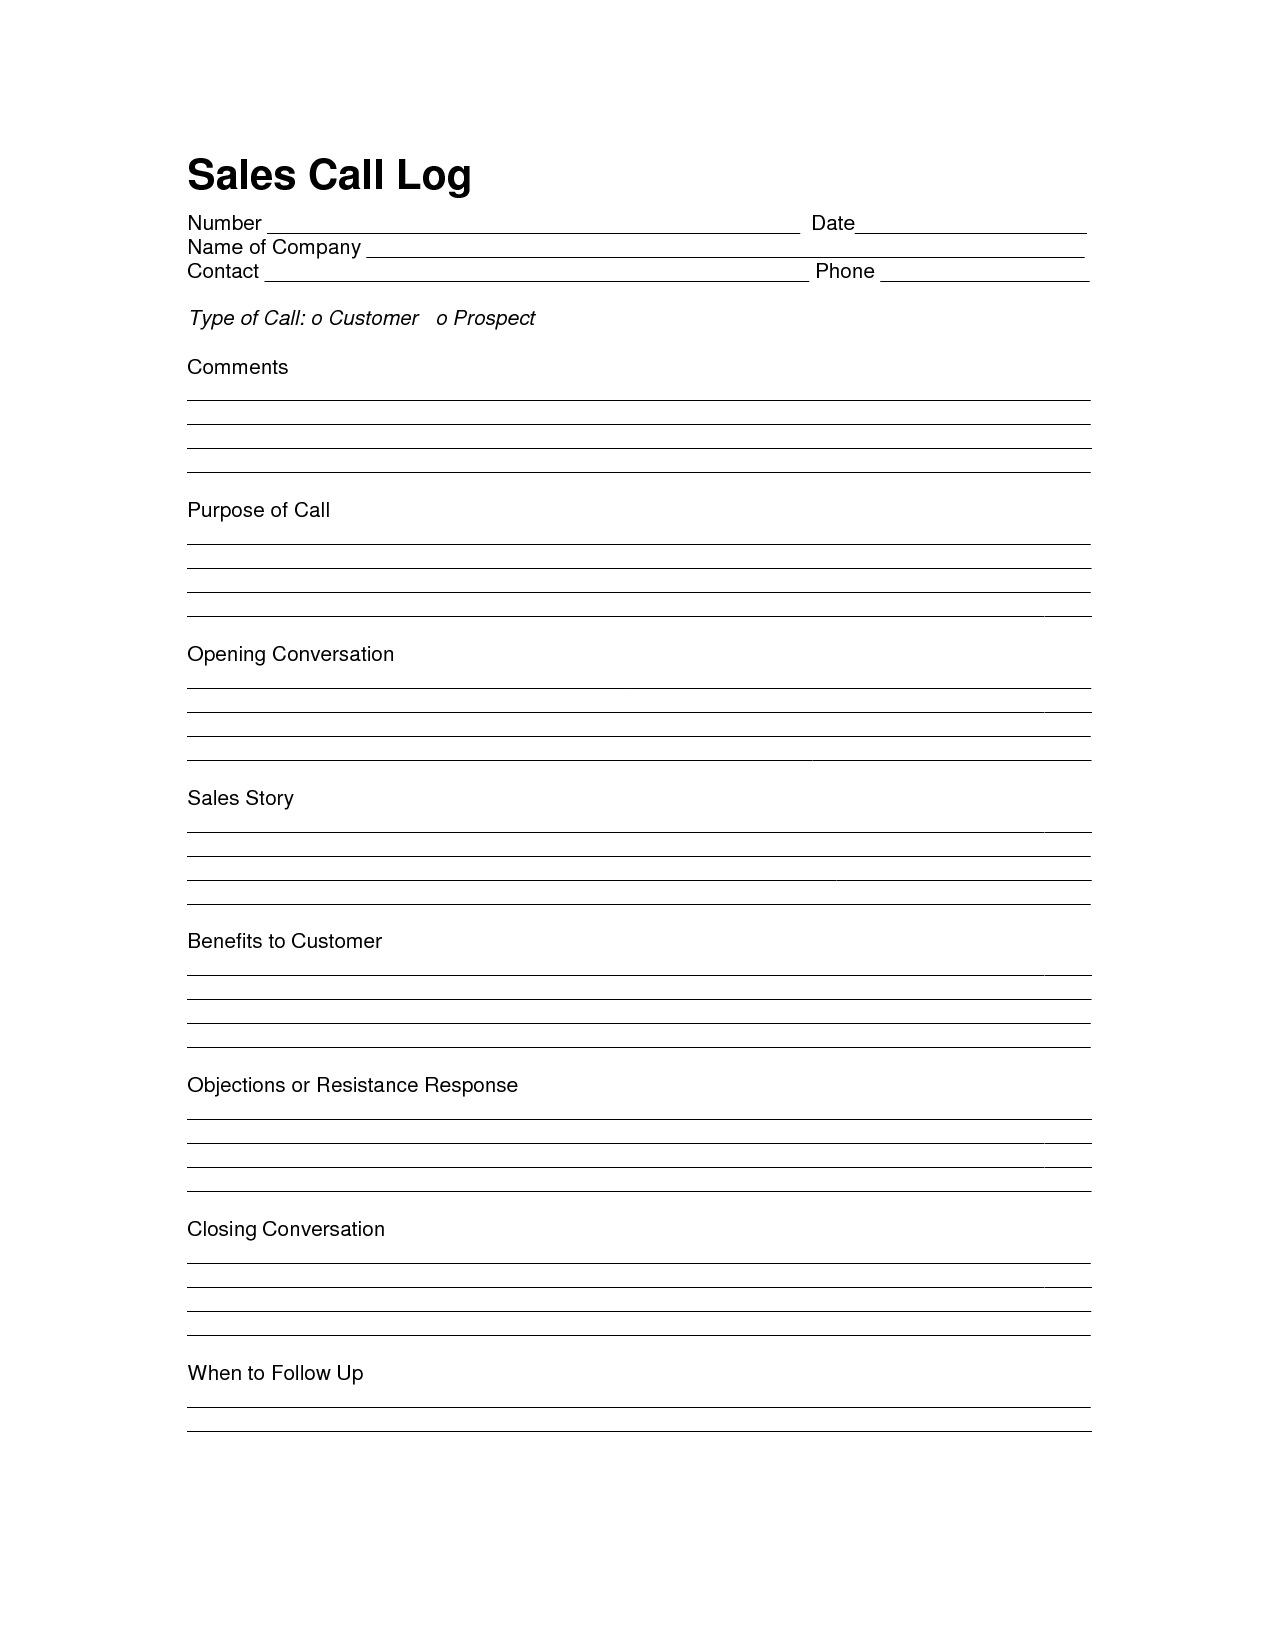 Sales Log Sheet Template | Sales Call Log Template | Call Intended For Sales Call Report Template